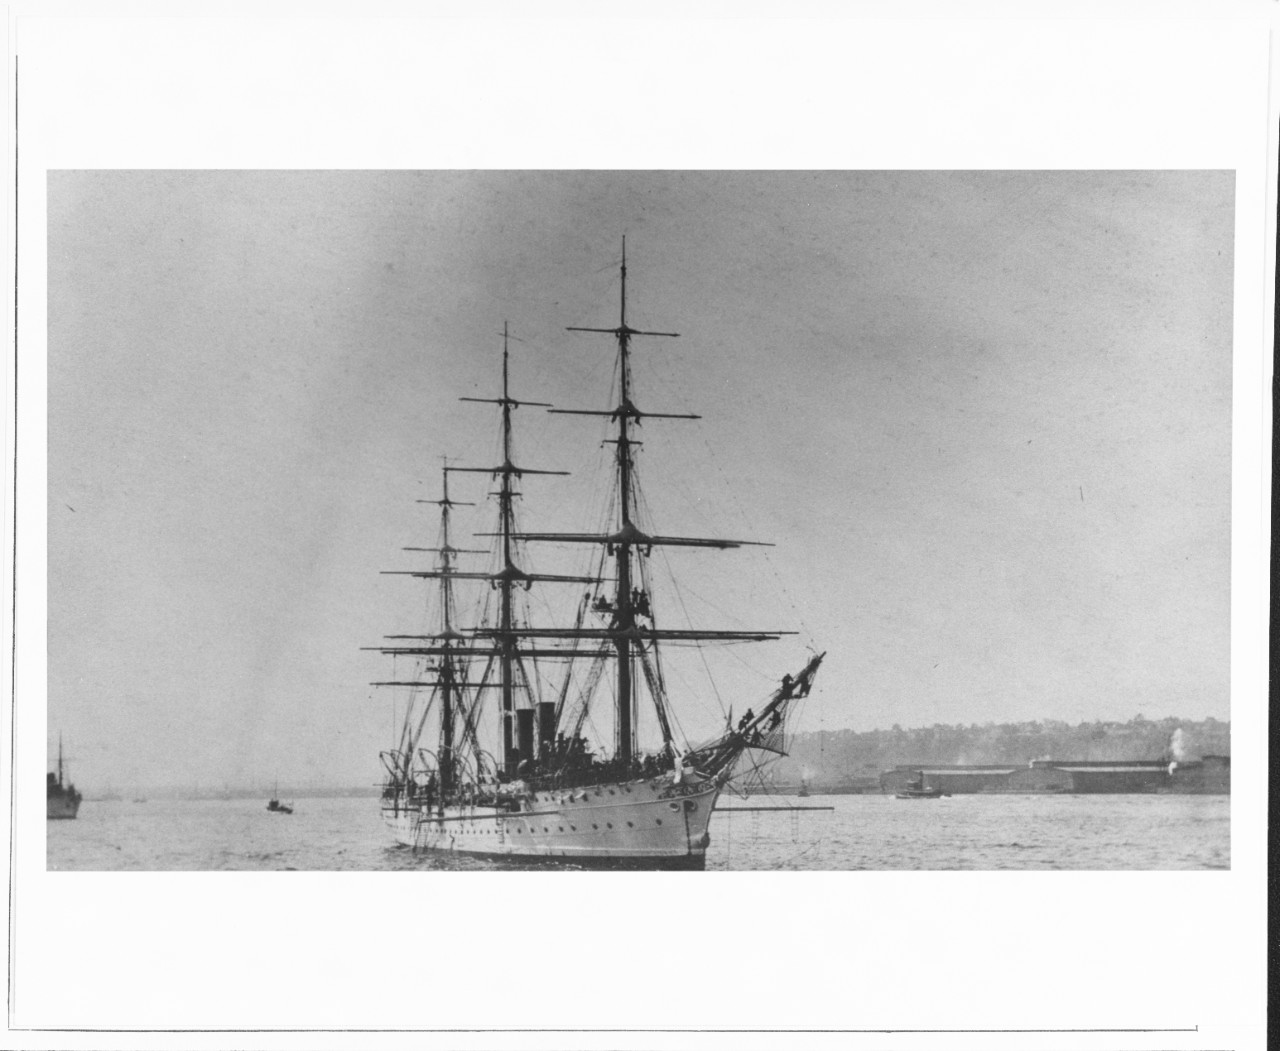 PRESIDENTE SARMIENTO (Argentine Training Ship, 1897)